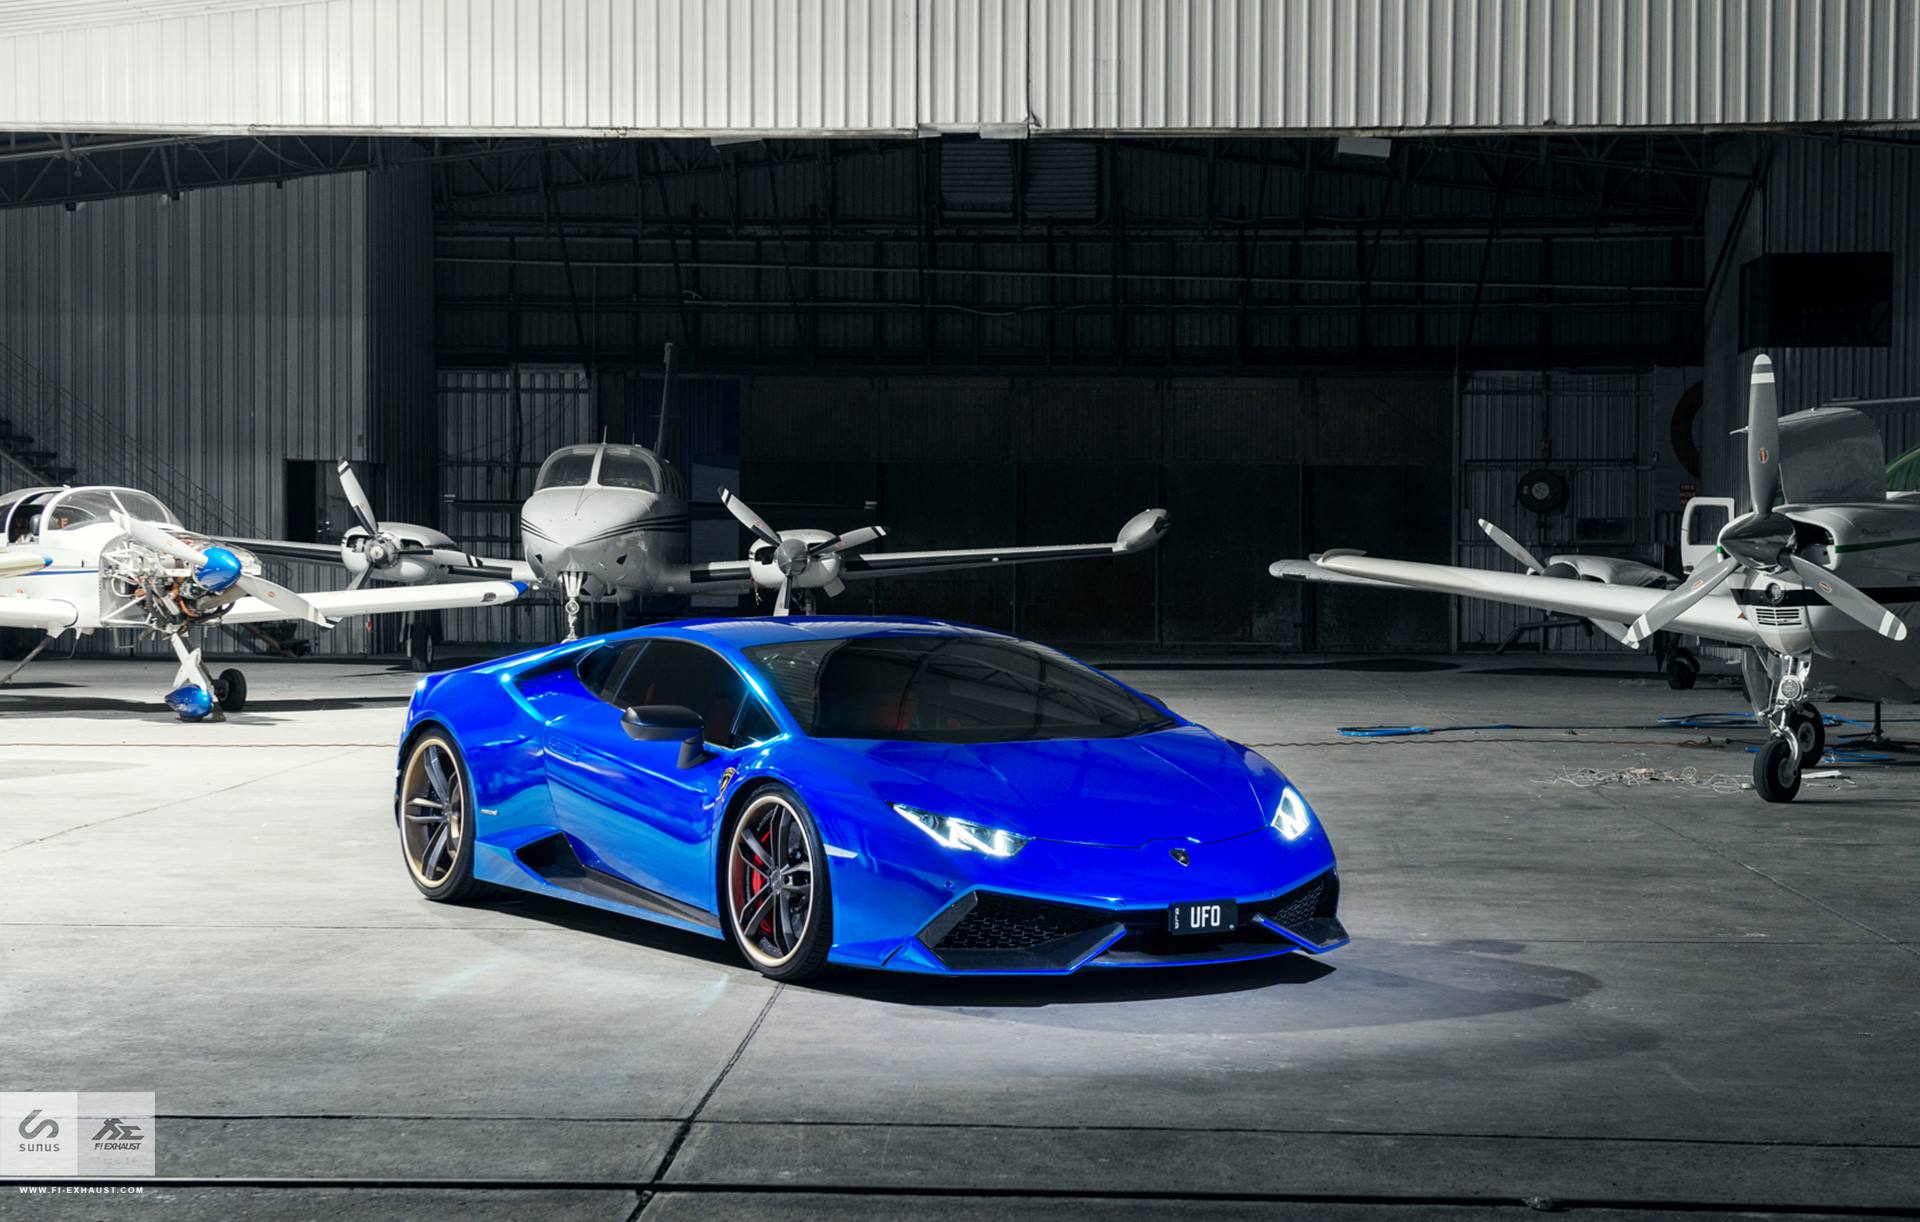 Stunning Blue Chrome Lamborghini Huracan by Sunus ...